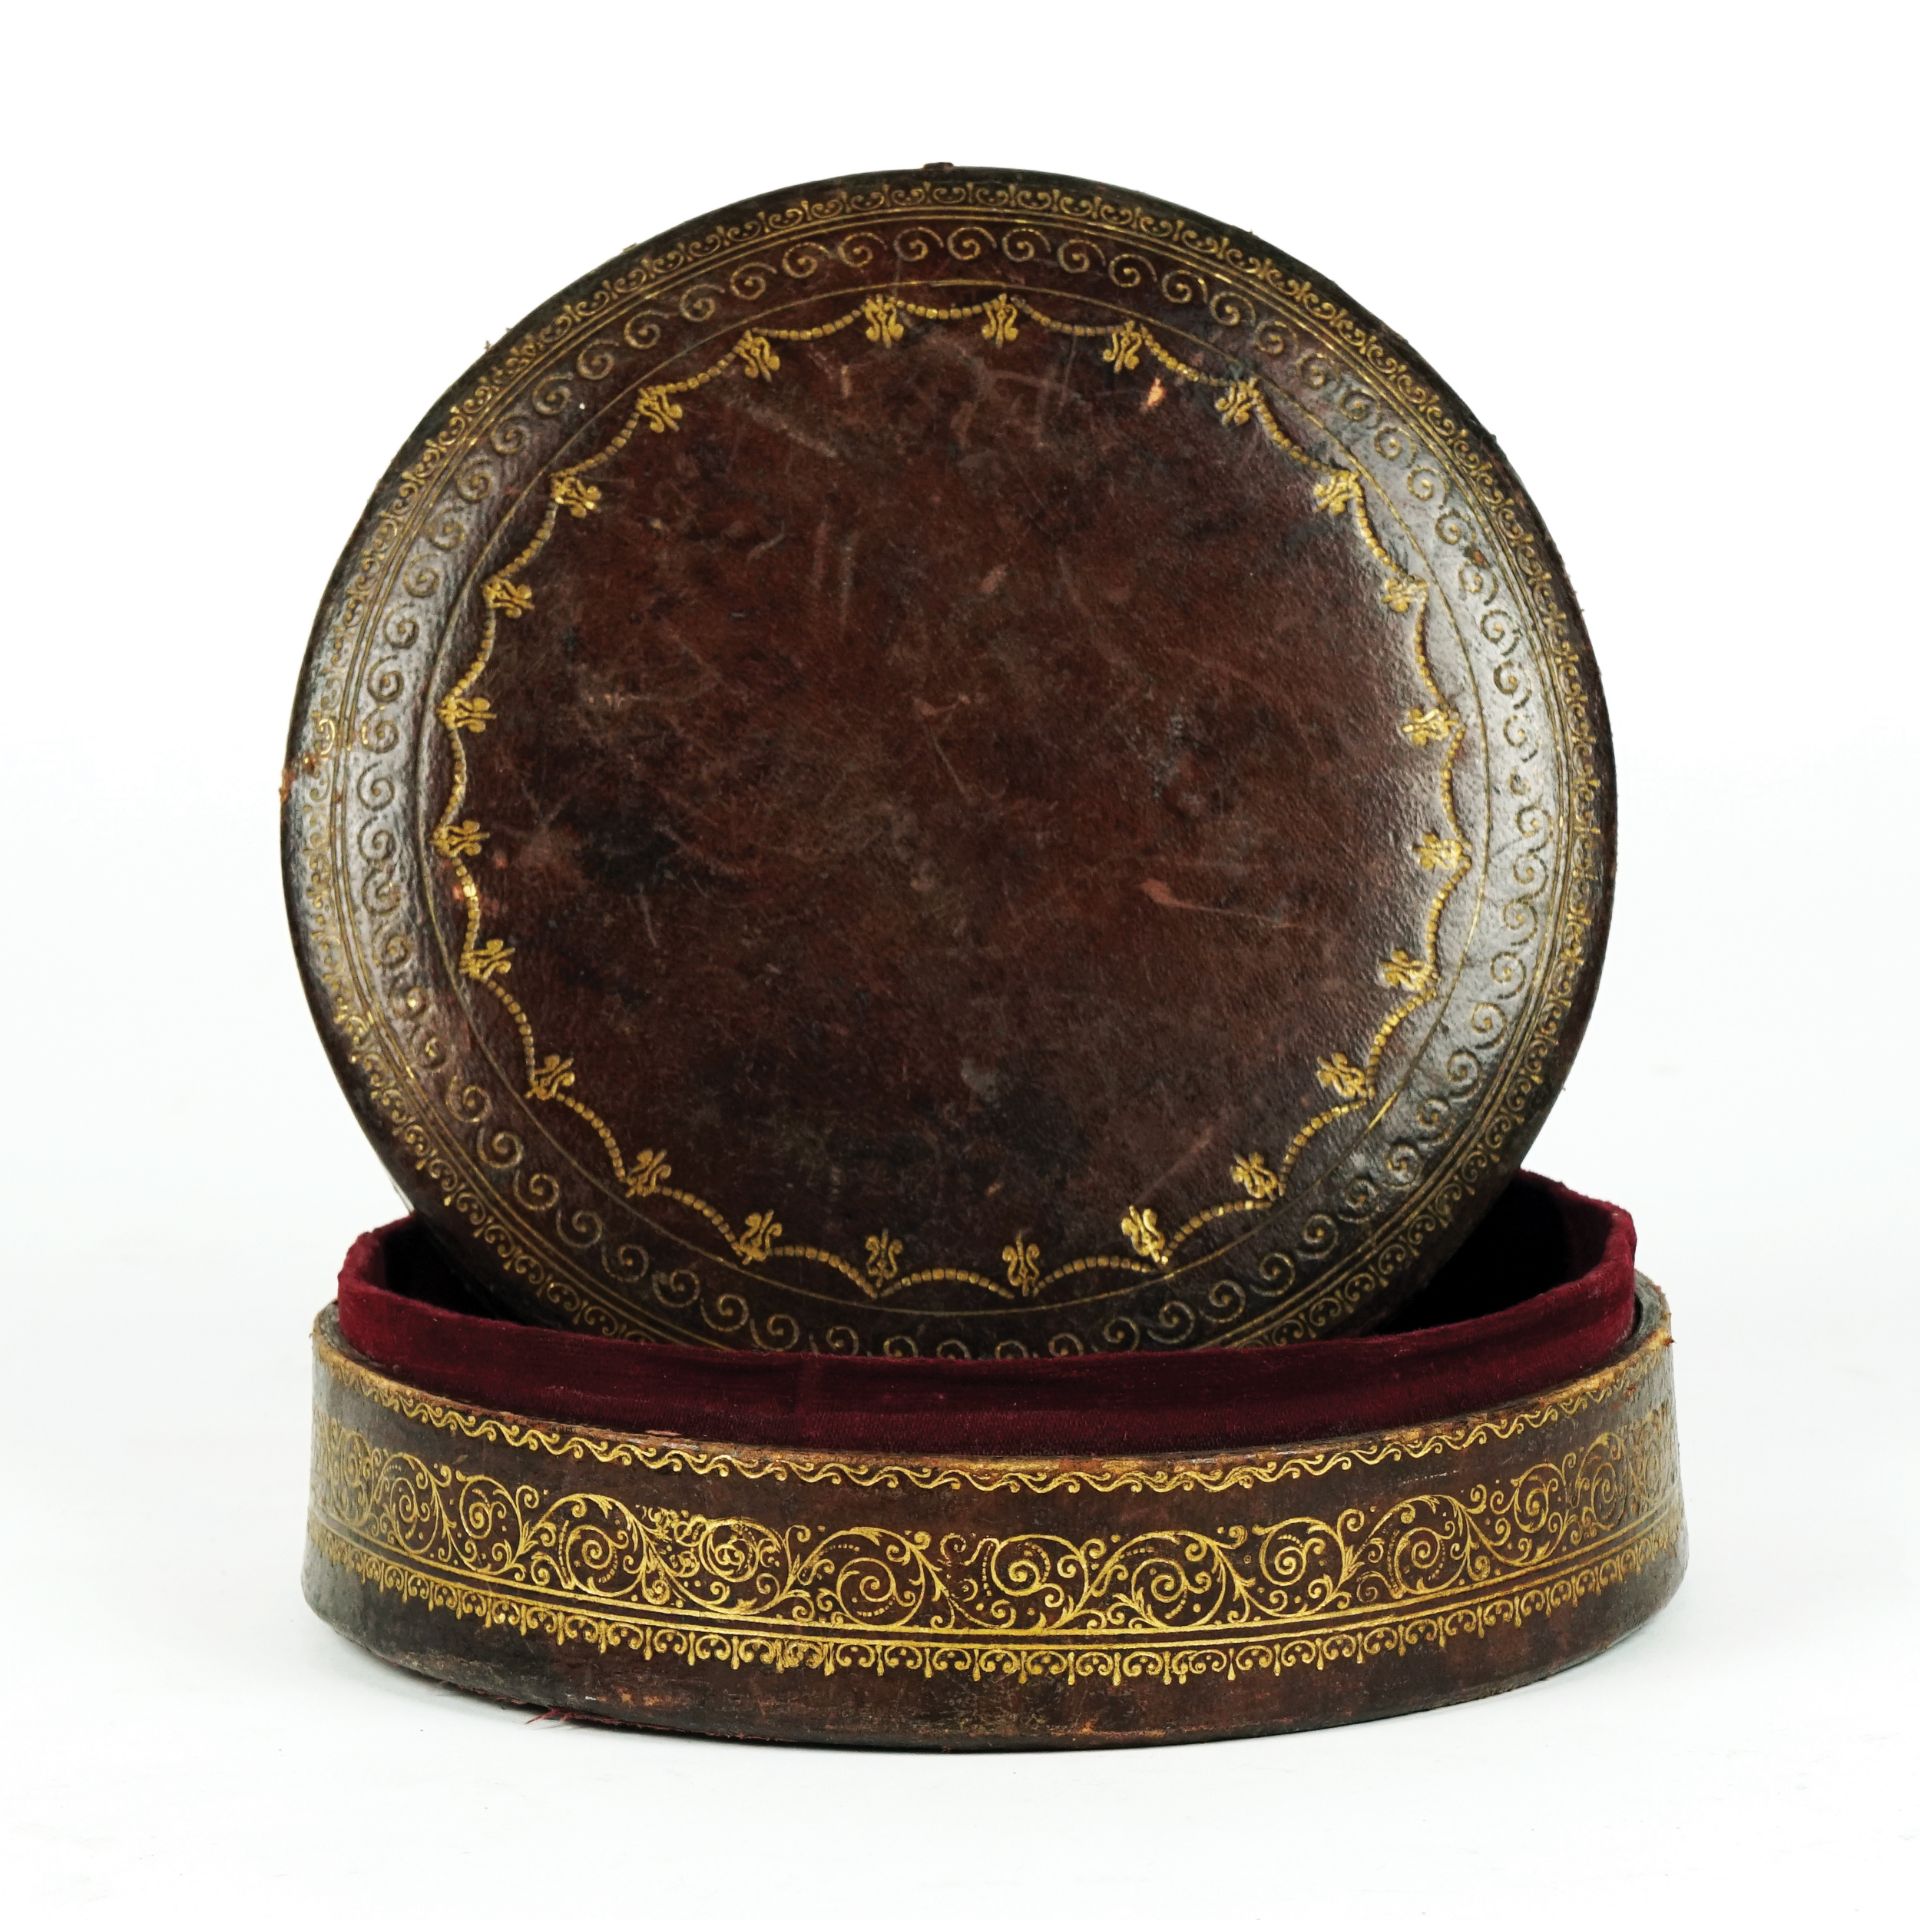 A leather round box, 19th century 17cm. diam.